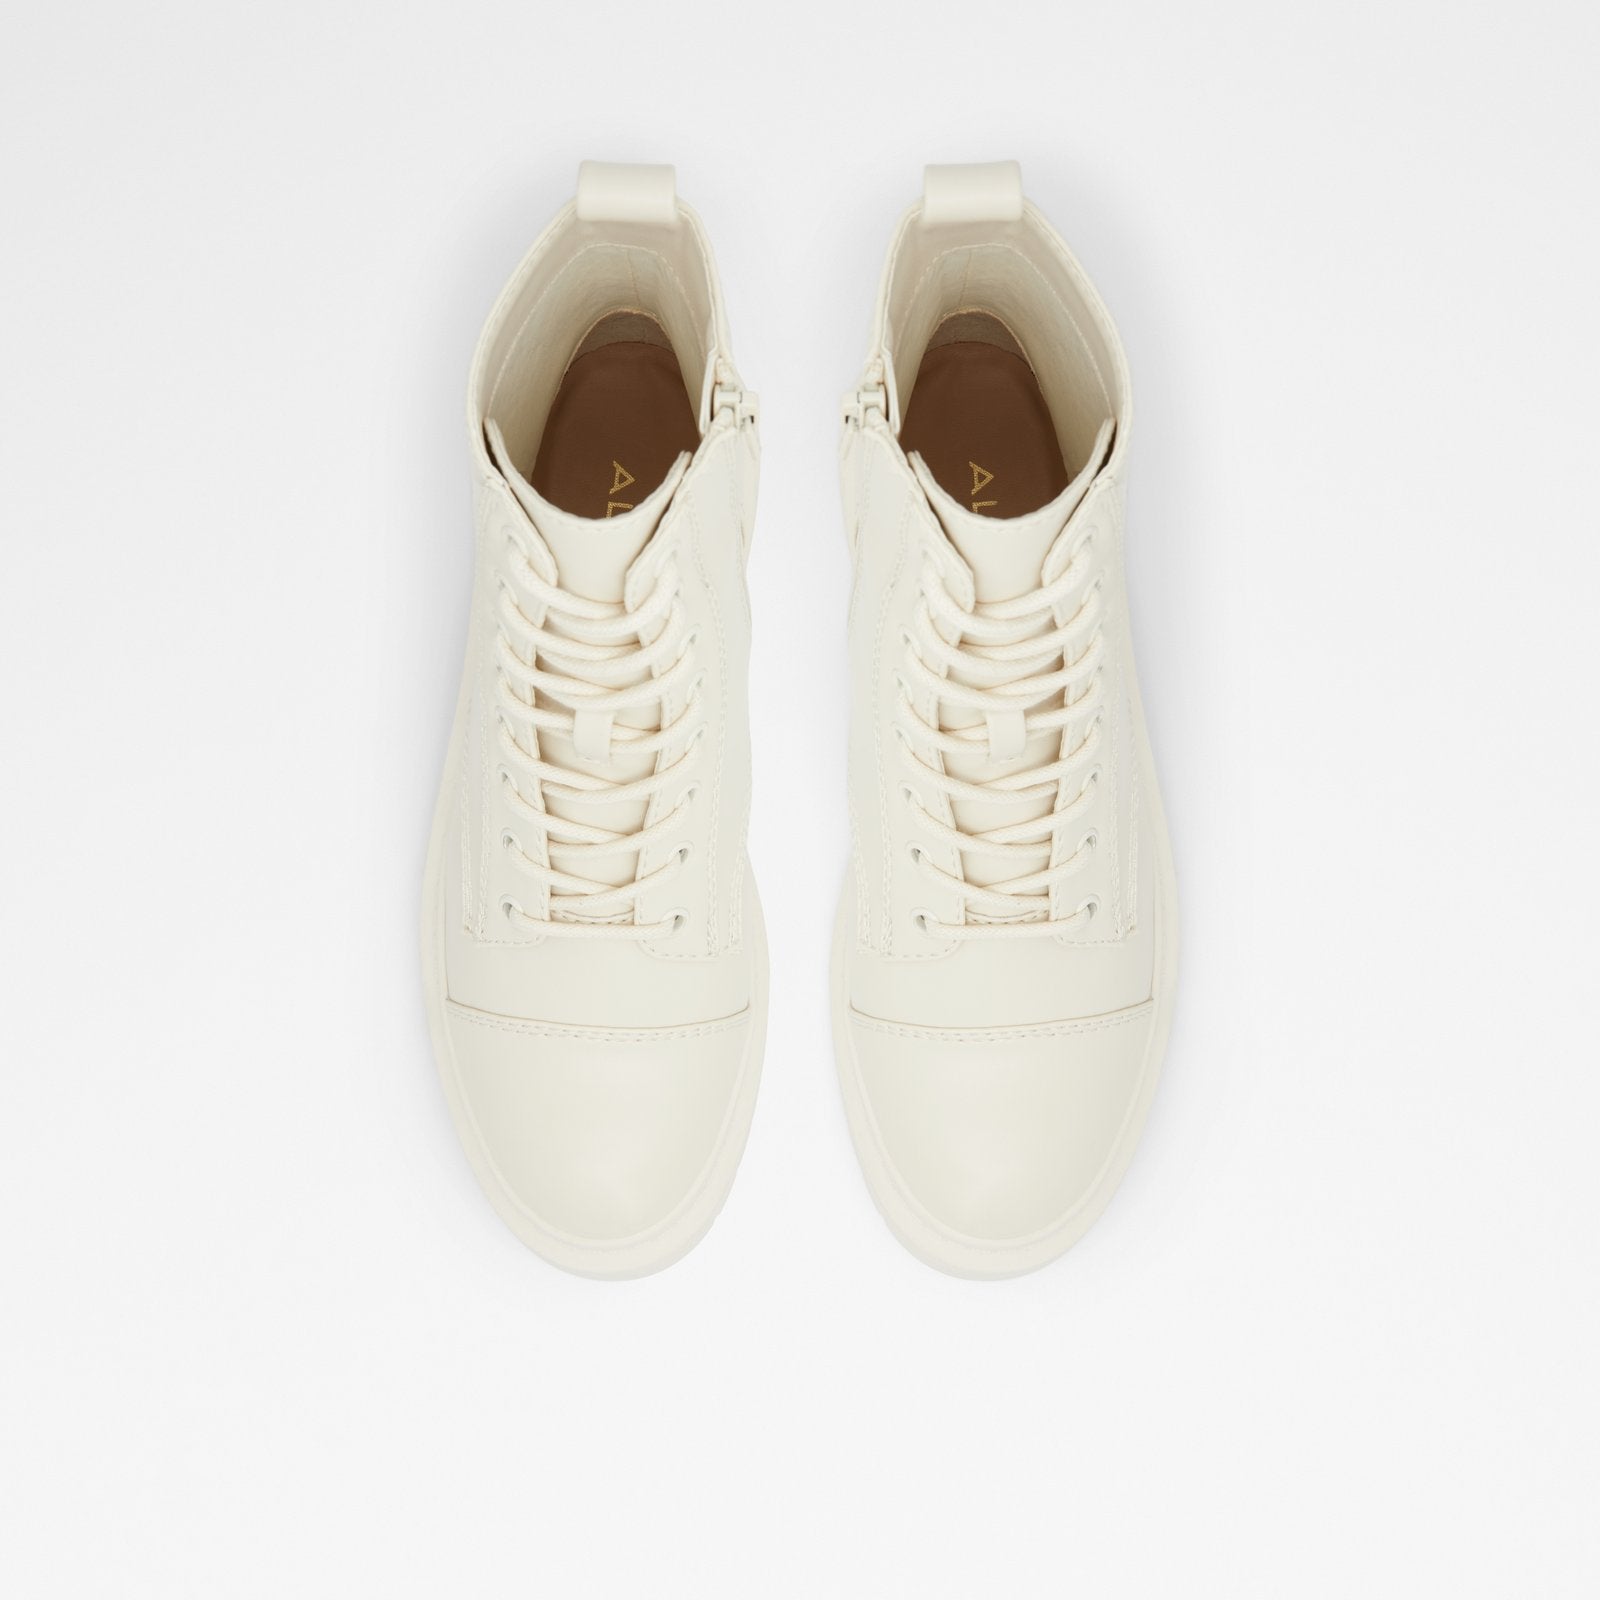 Goer Women Shoes - White - ALDO KSA